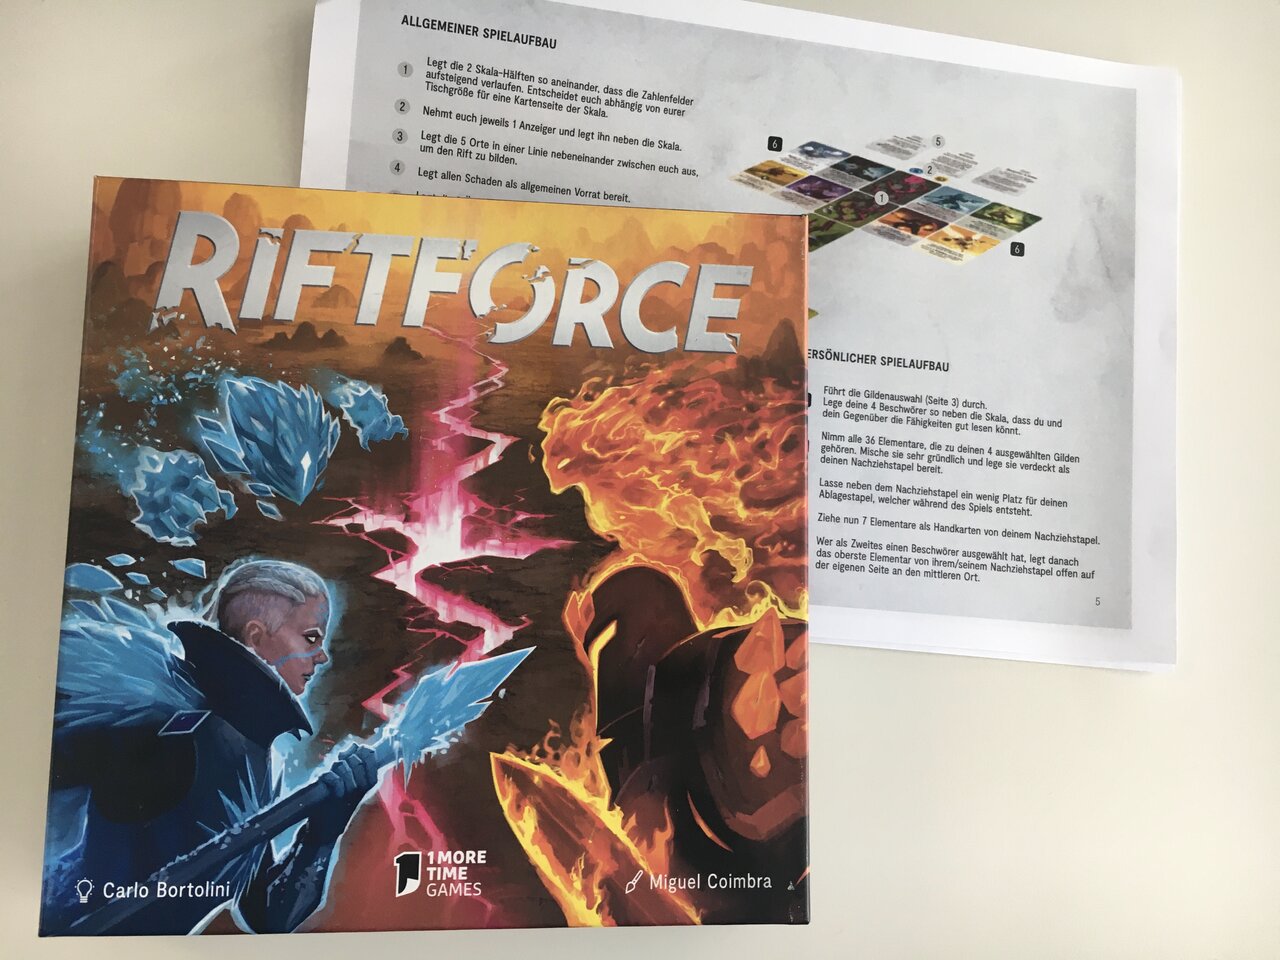 Das Brettspiel "Riftforce" samt Anleitung